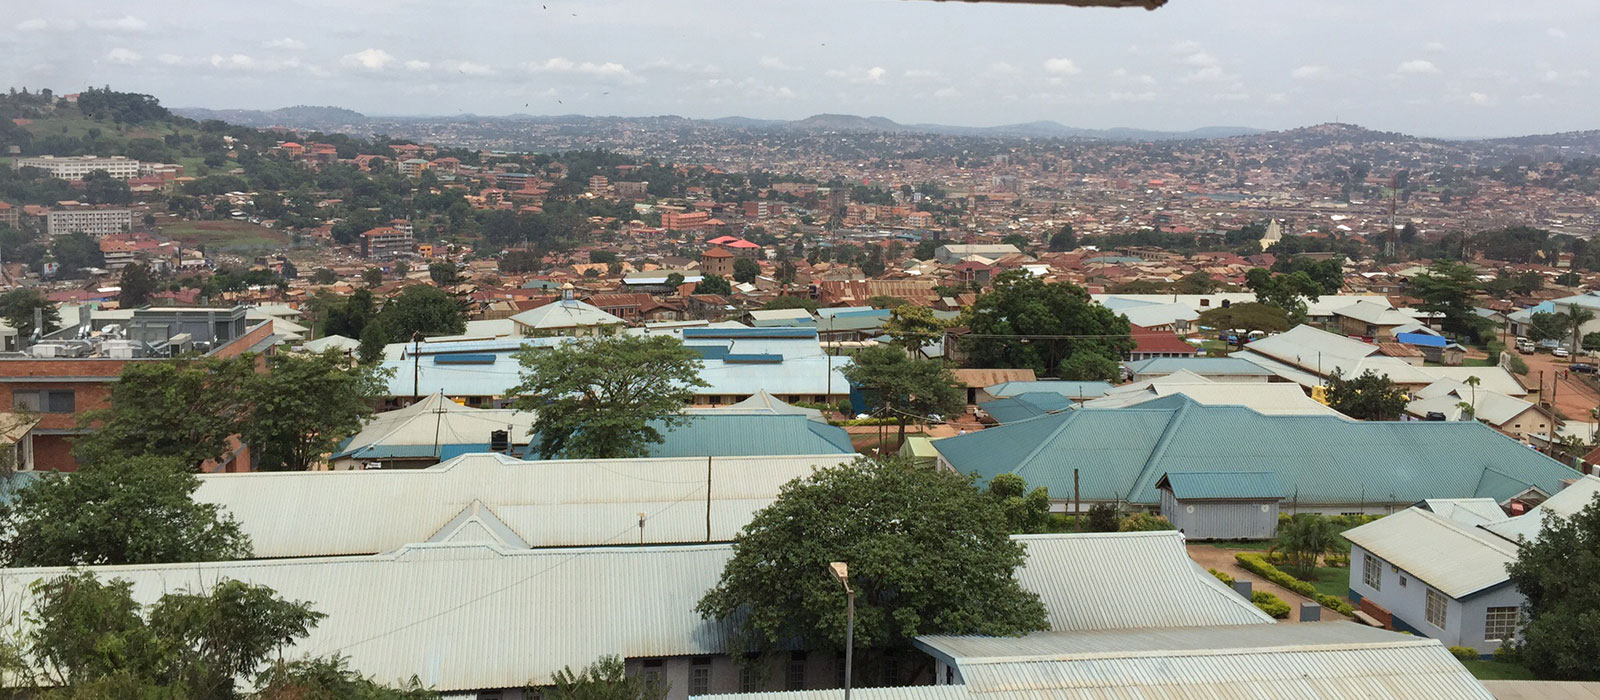 Mulago Hill, Mulago hospital